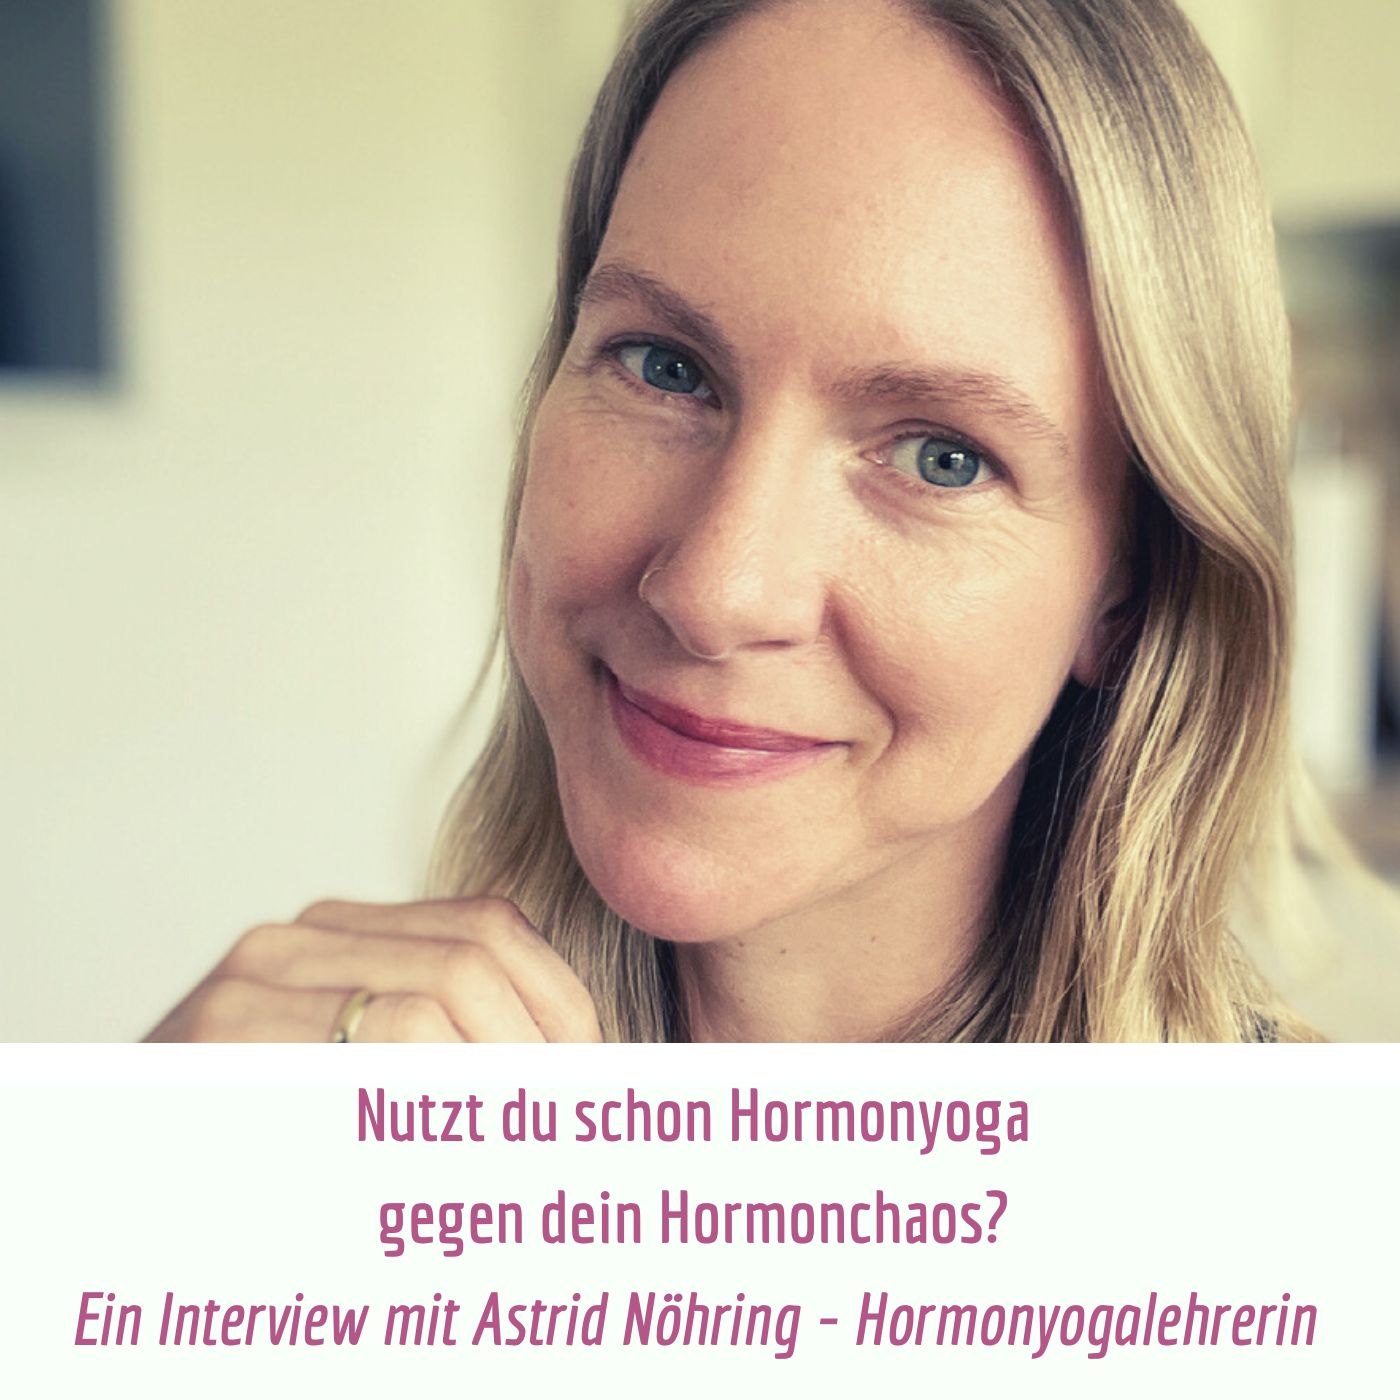 Nutzt du schon Hormonyoga gegen dein Hormonchaos?